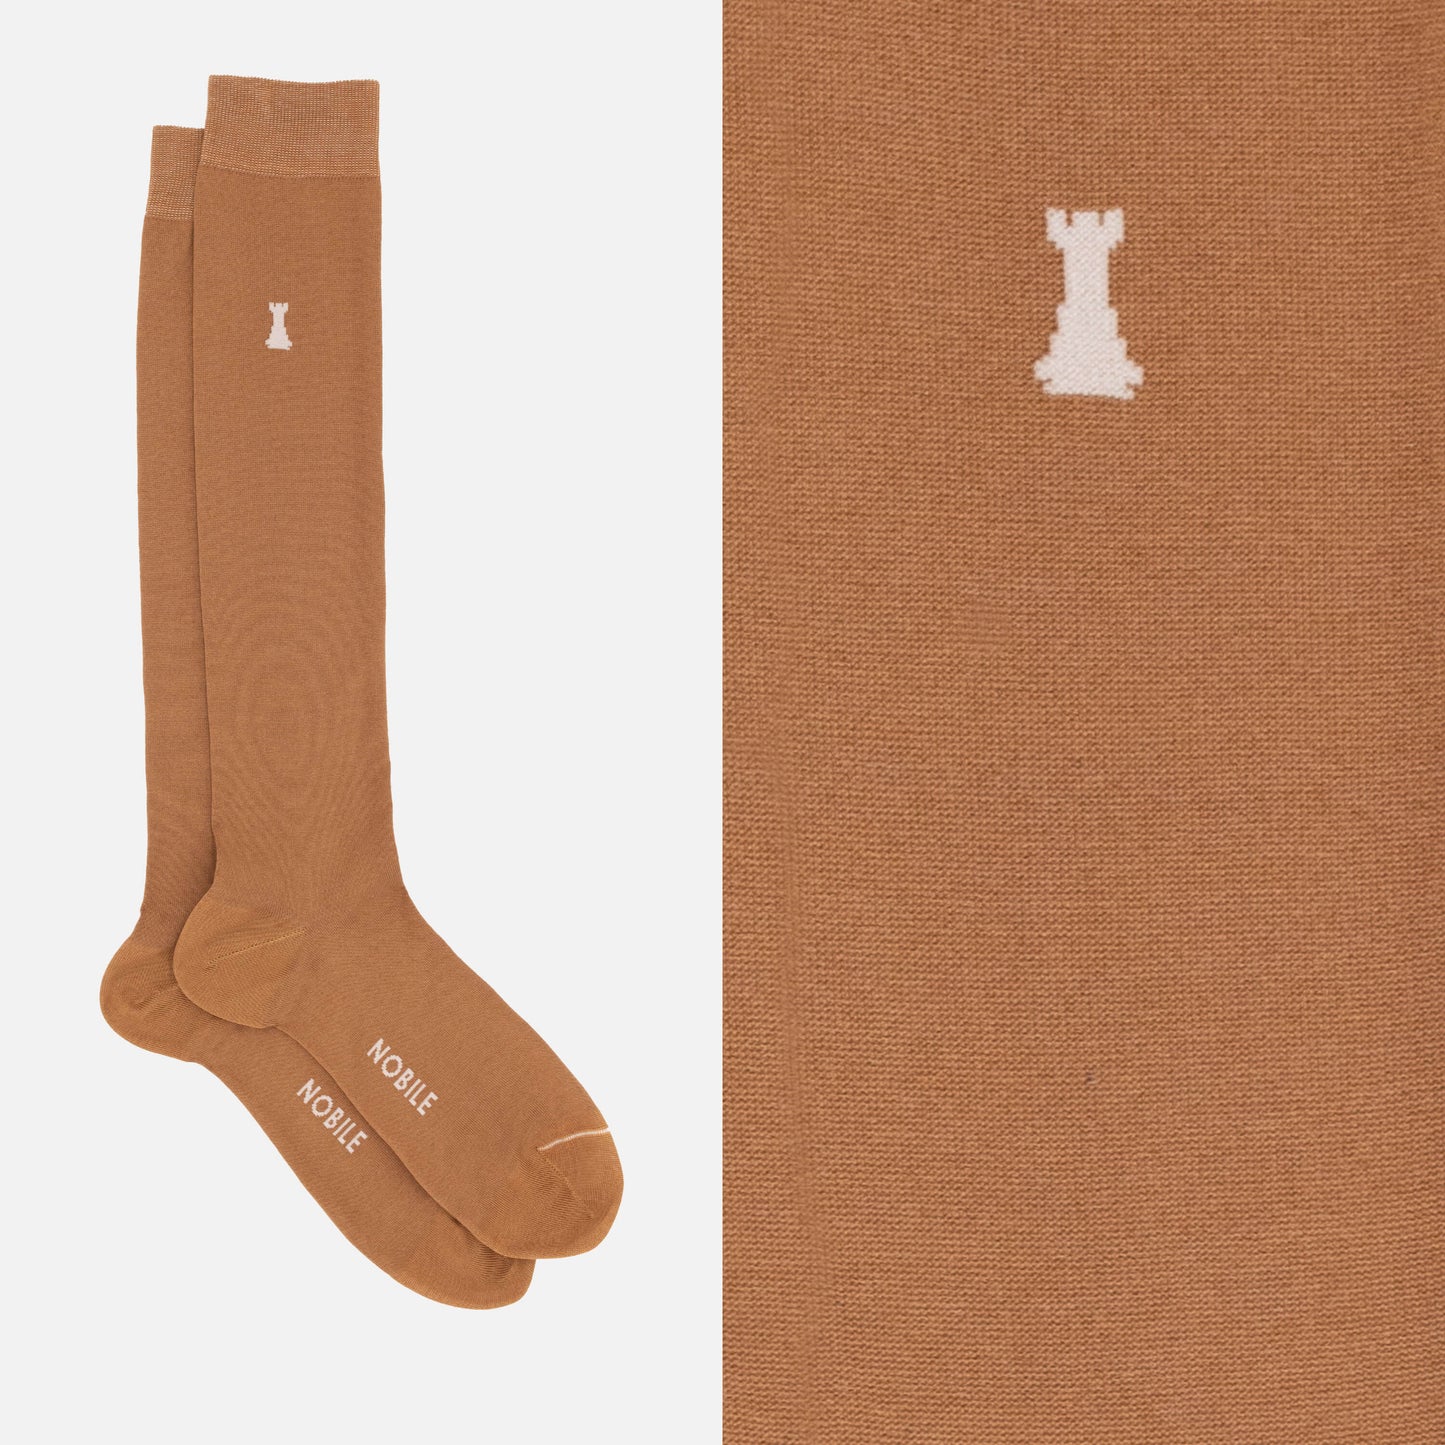 Box of 6 knee high socks - Basic solid colors